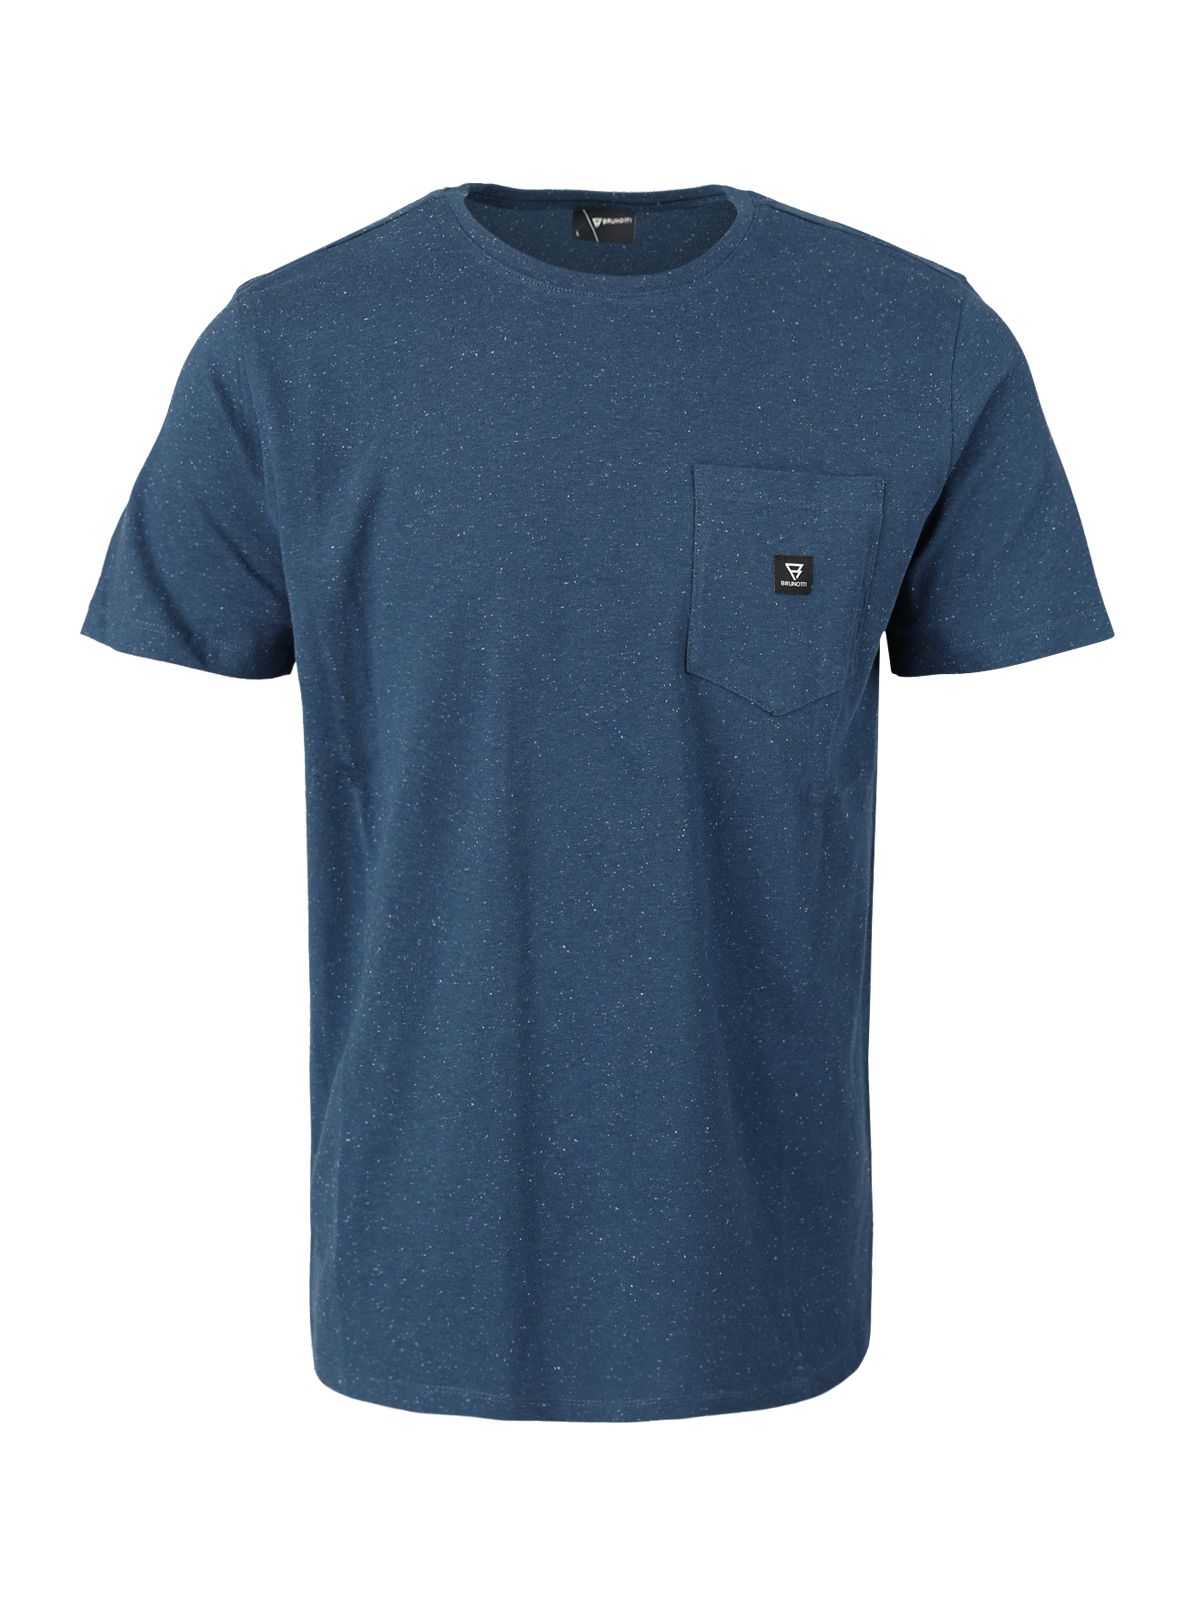 Axle-Neppy Herren T-Shirt | Blau